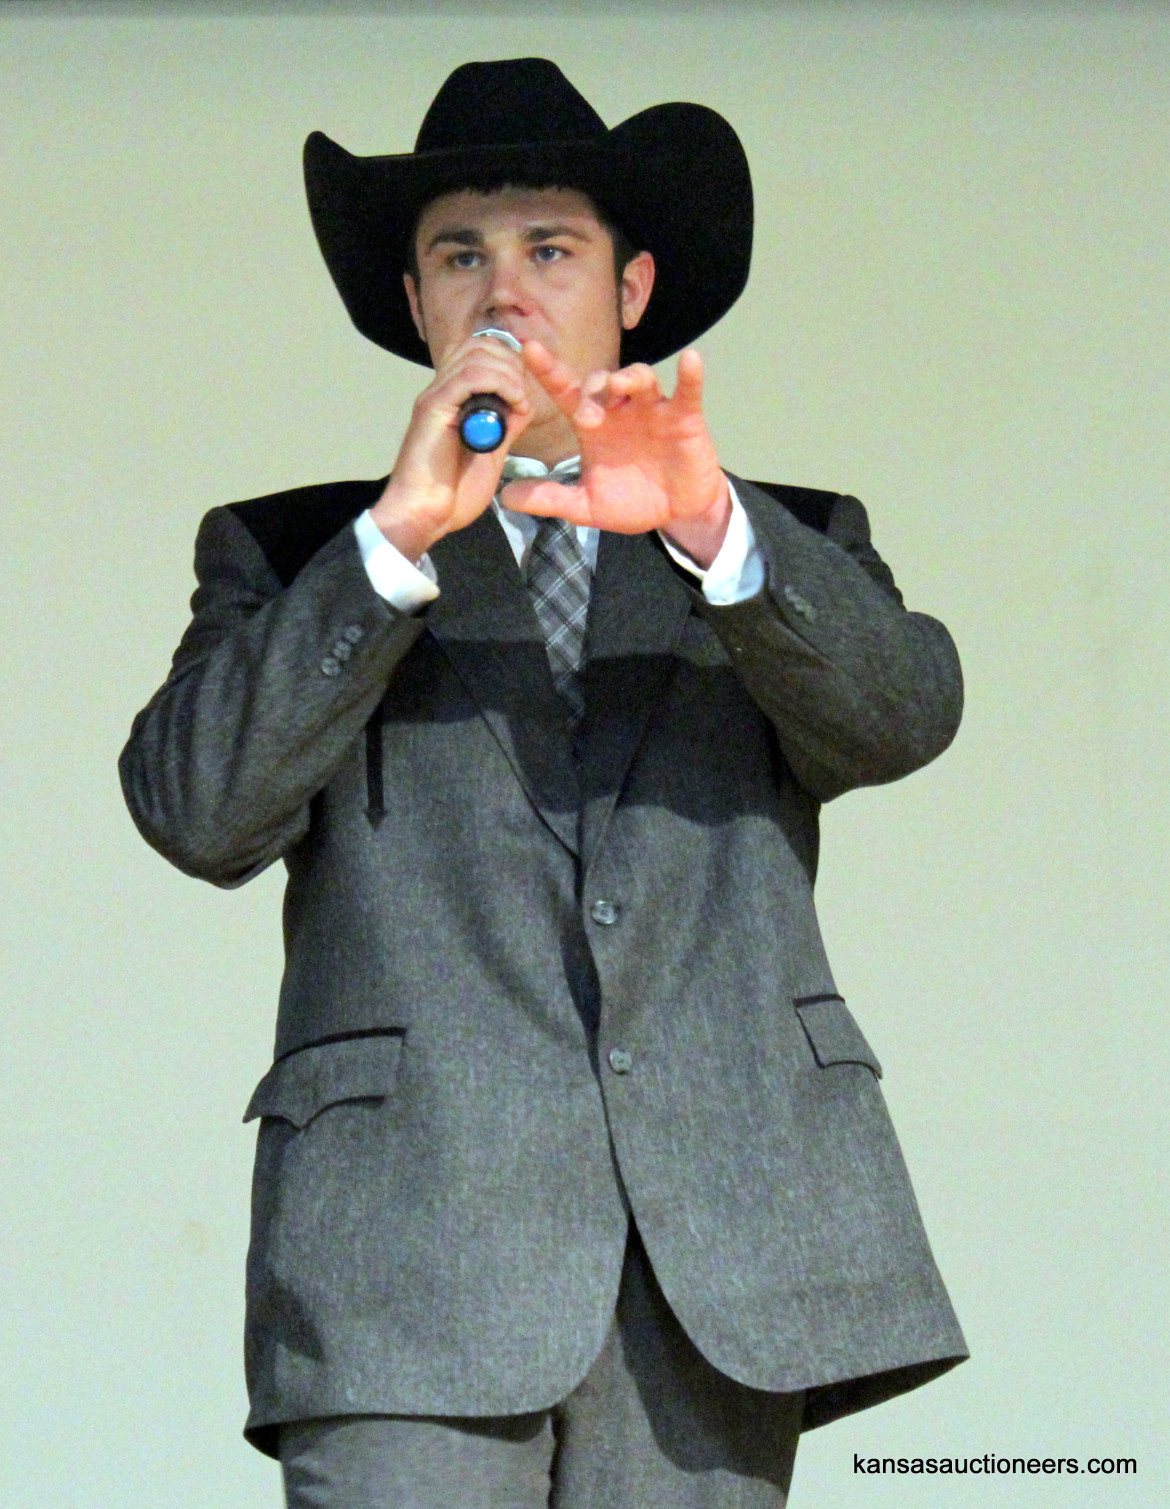 Jase Hubert competing in the 2016 Kansas Auctioneer Preliminaries.